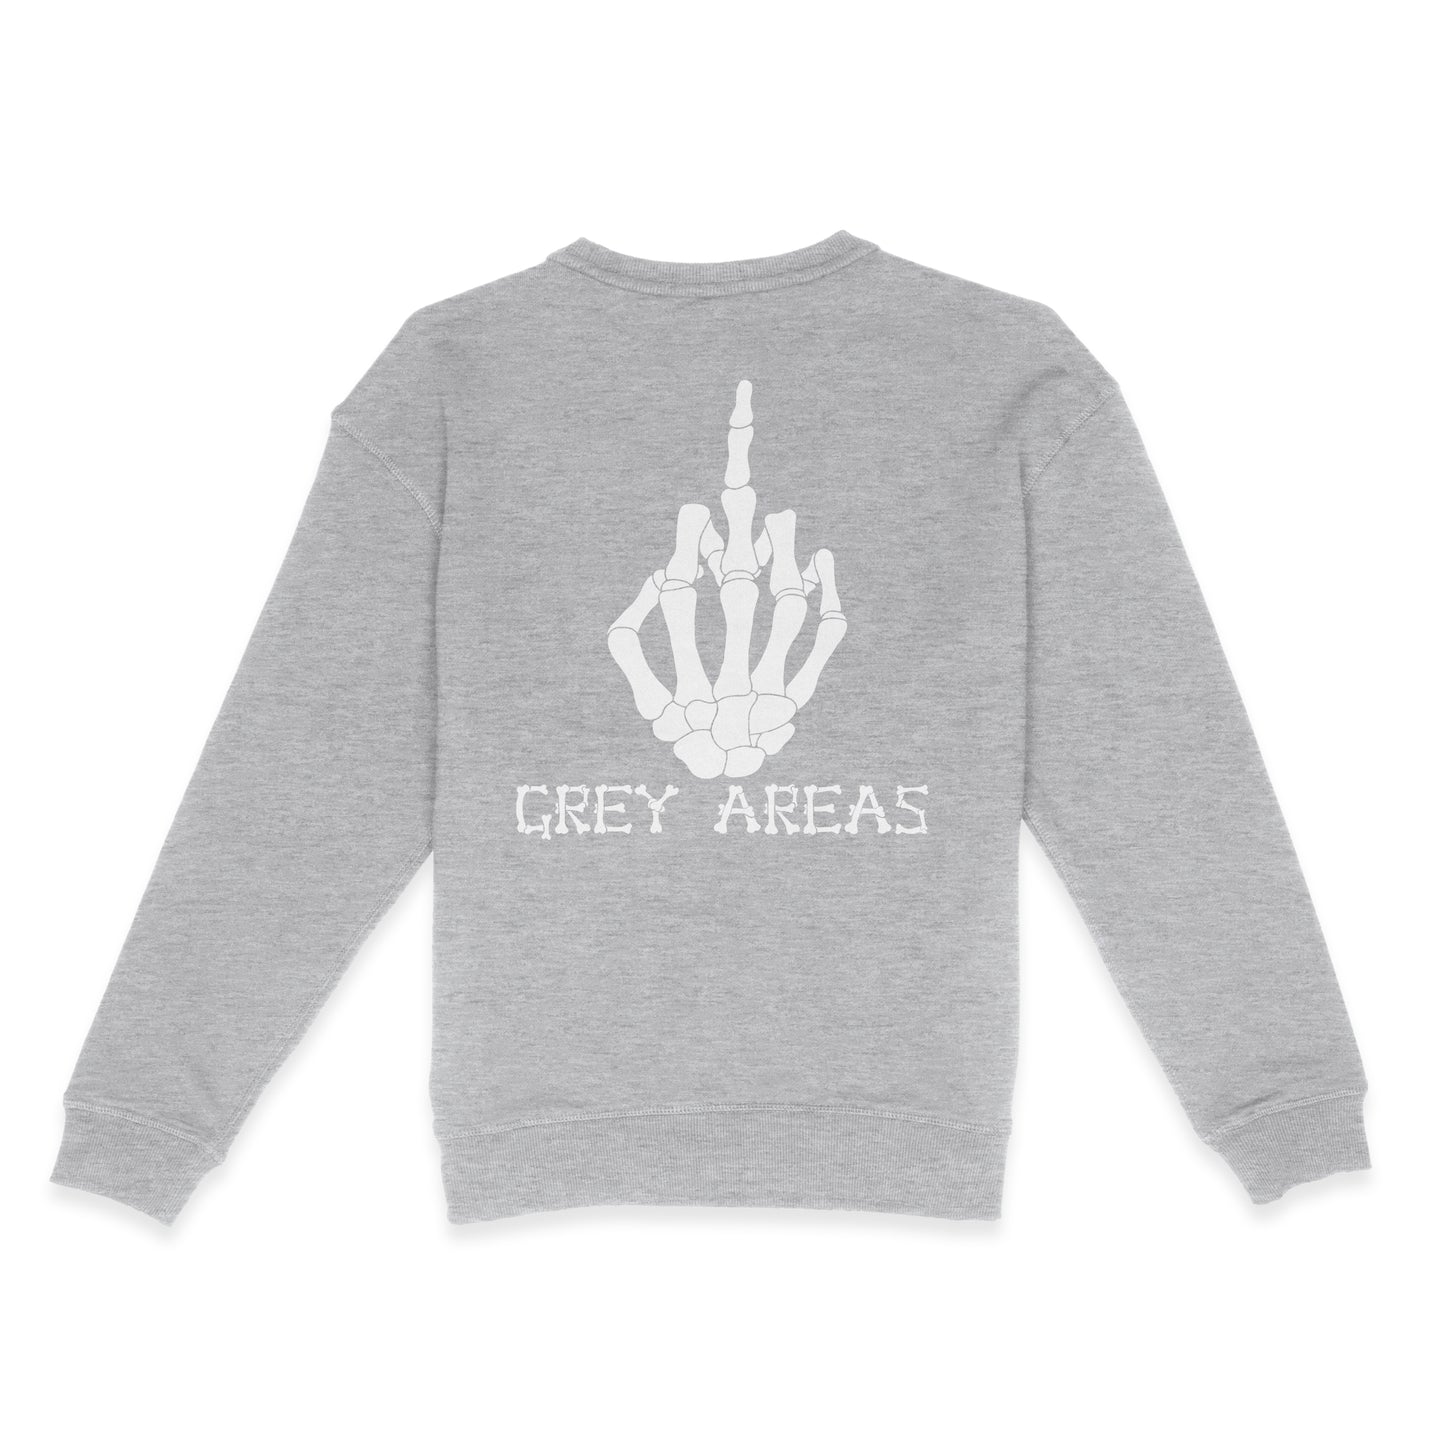 F*** Grey Areas - Premium Sweatshirt (Heather Grey)